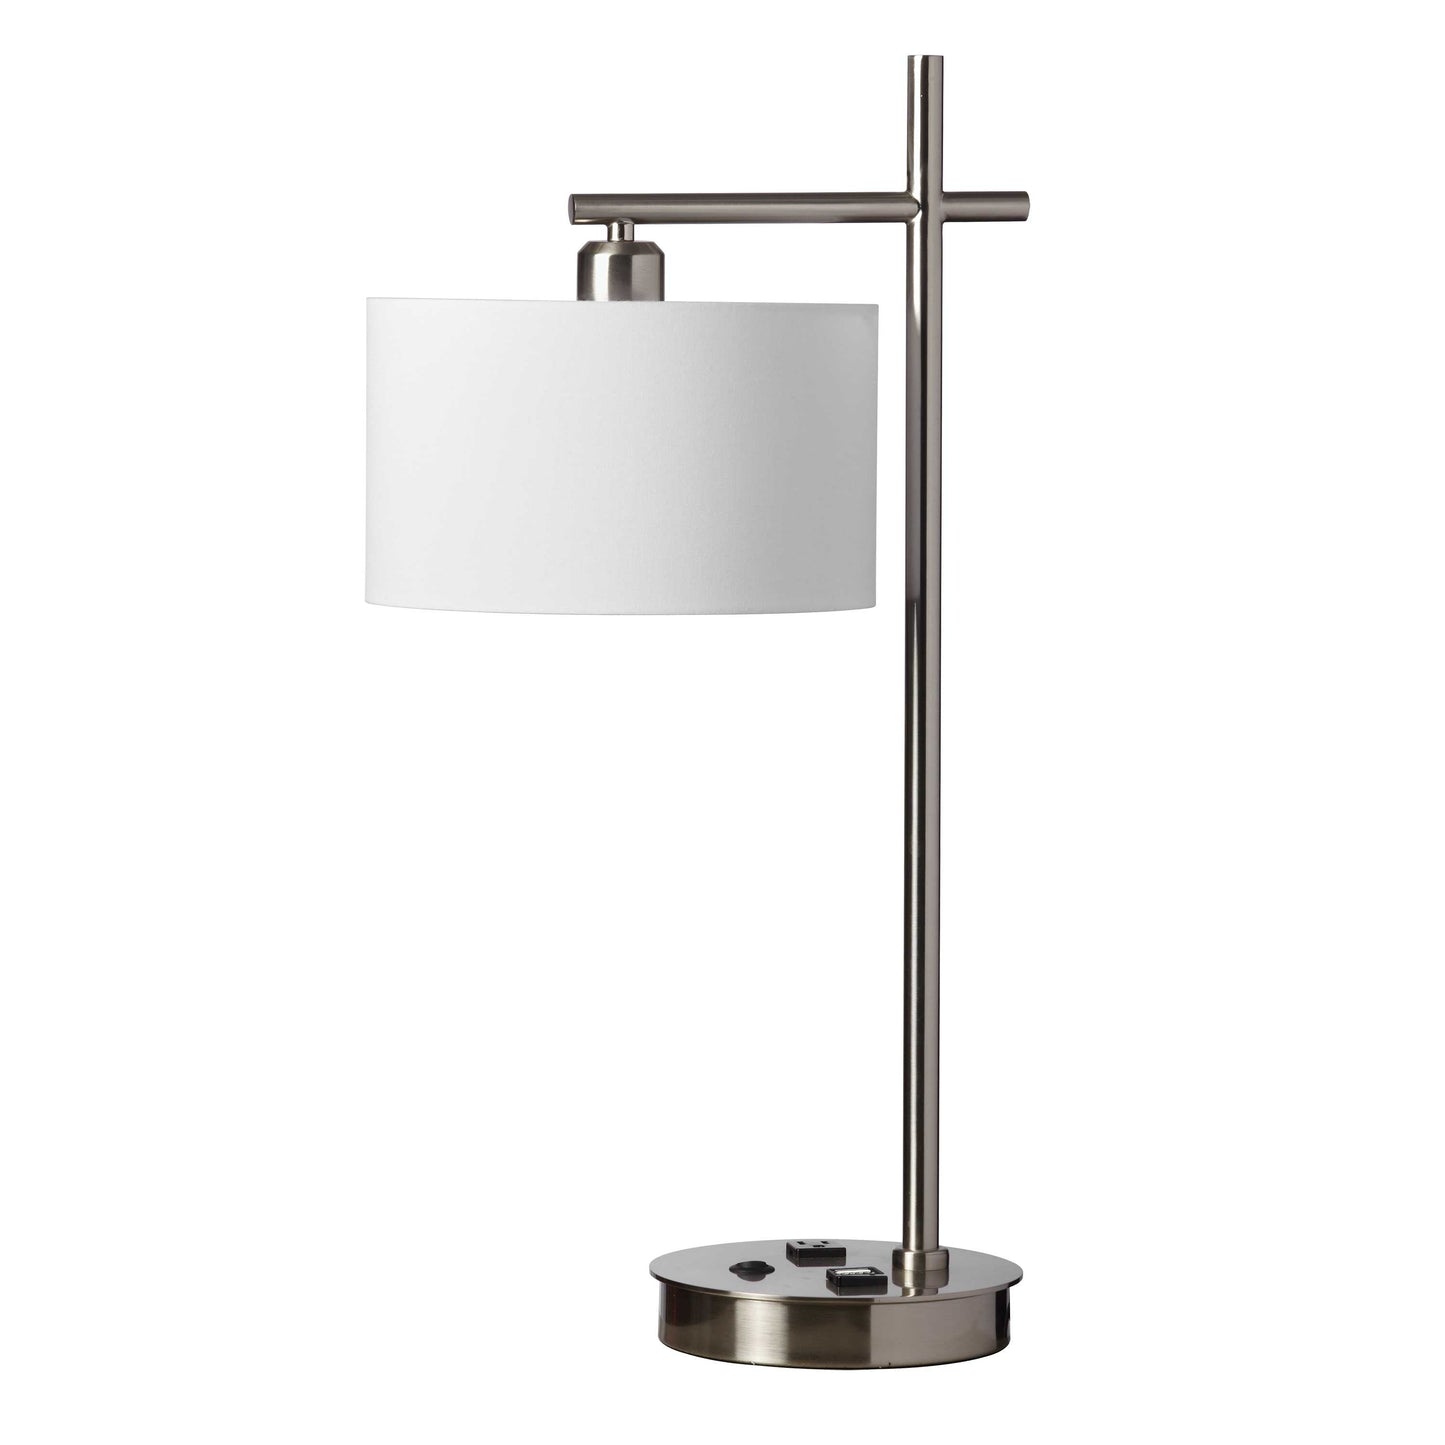 Dainolite 1 Light Incandescent Table Lamp with USB Port and Receptacle, Satin Chrome Finish - Renoz